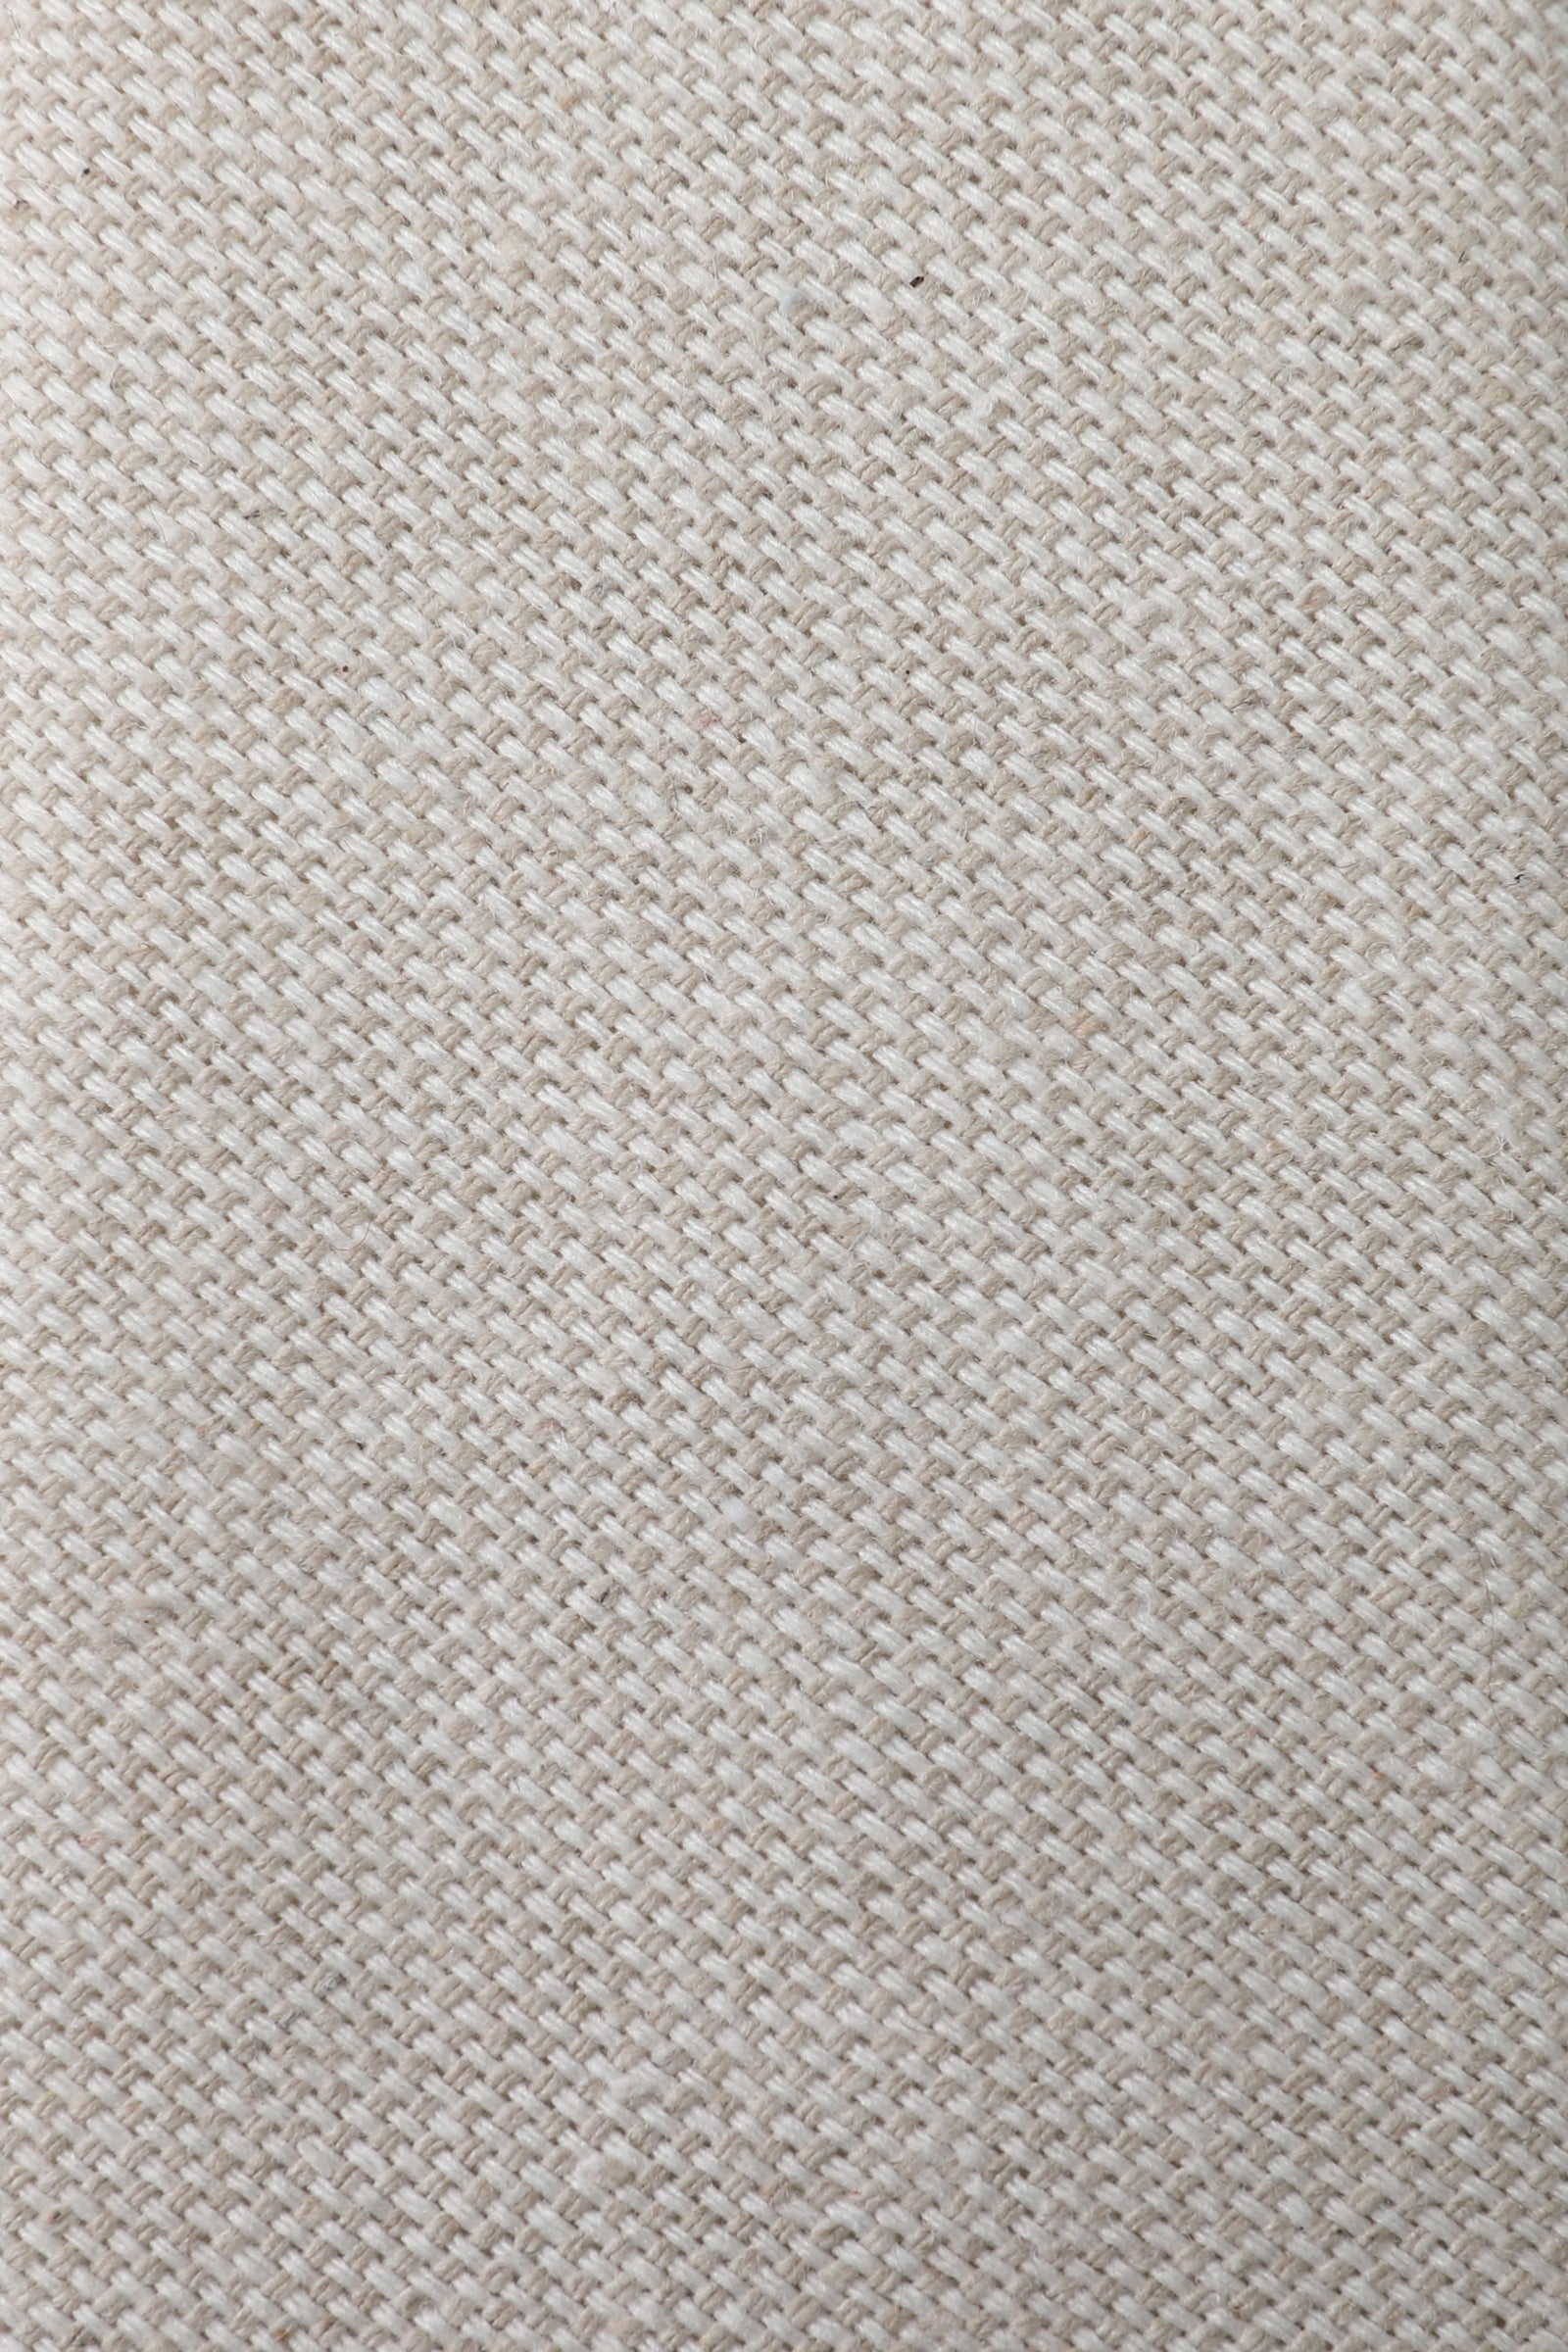 Dry Khaki White Linen Kids Necktie Fabric